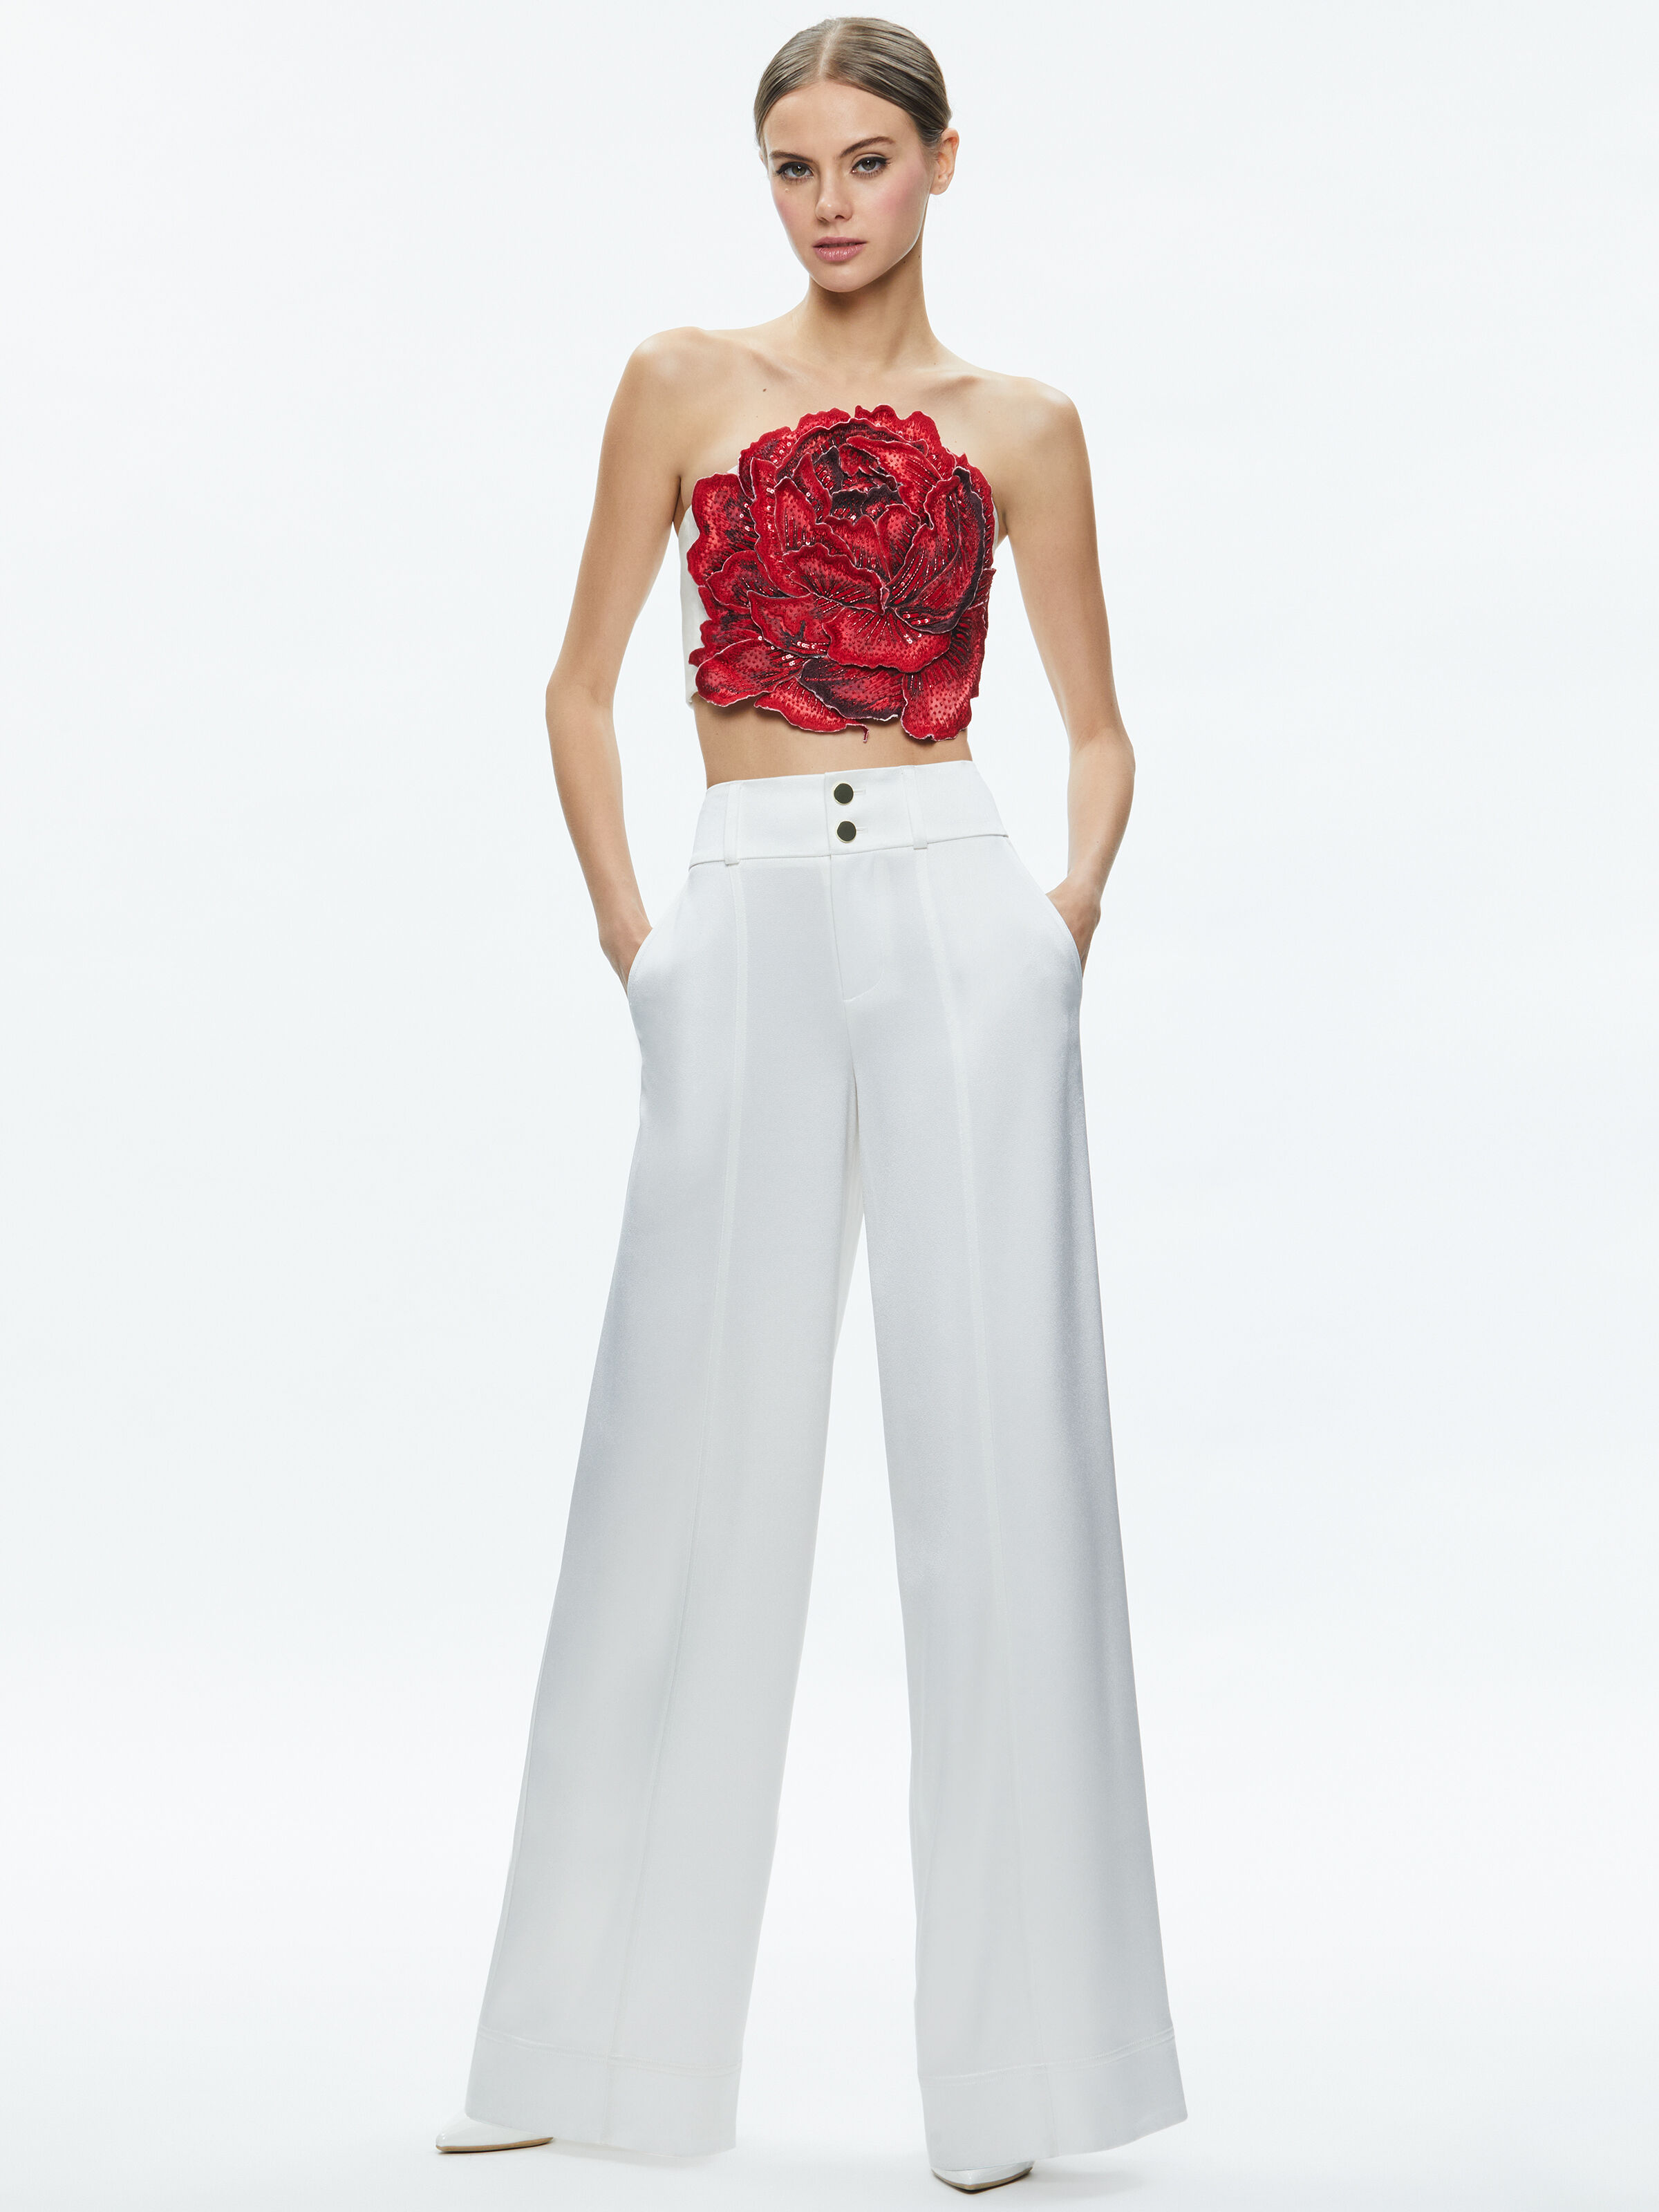 New Arrivals - Latest Designer Dresses, Jeans & Tops | Alice + Olivia